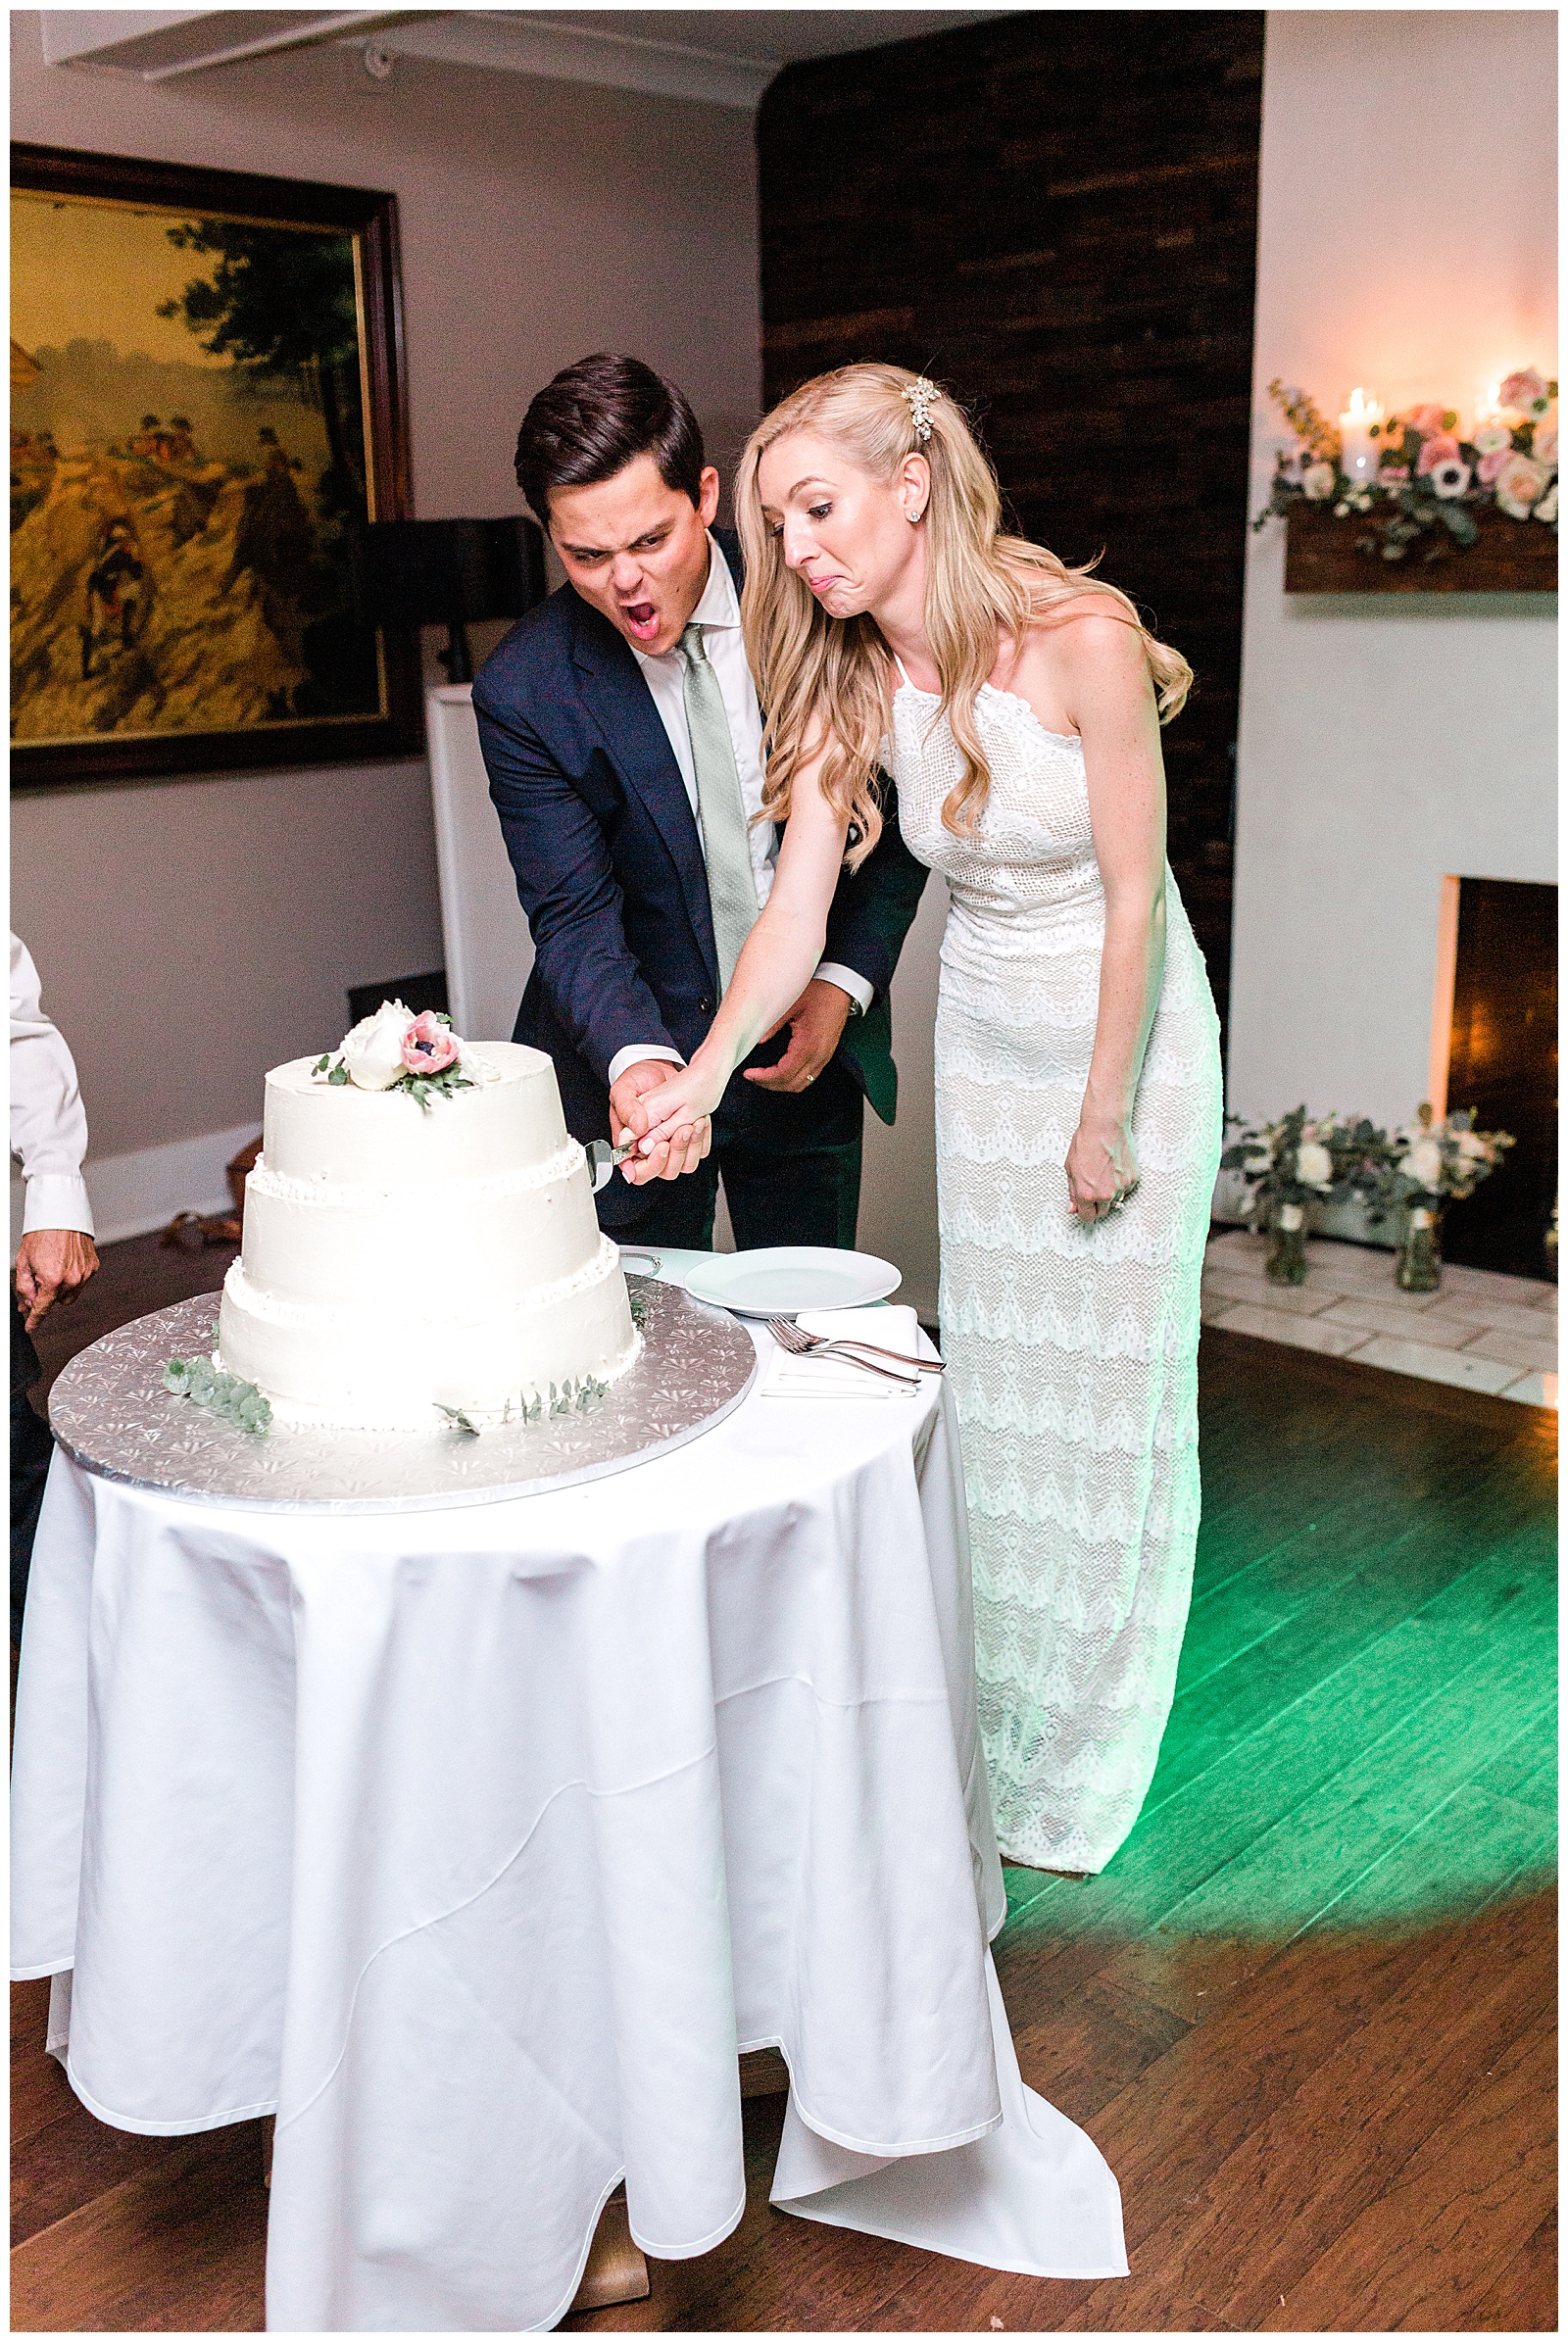 wedding-cake-cutting-roger-sherman-inn.jpg